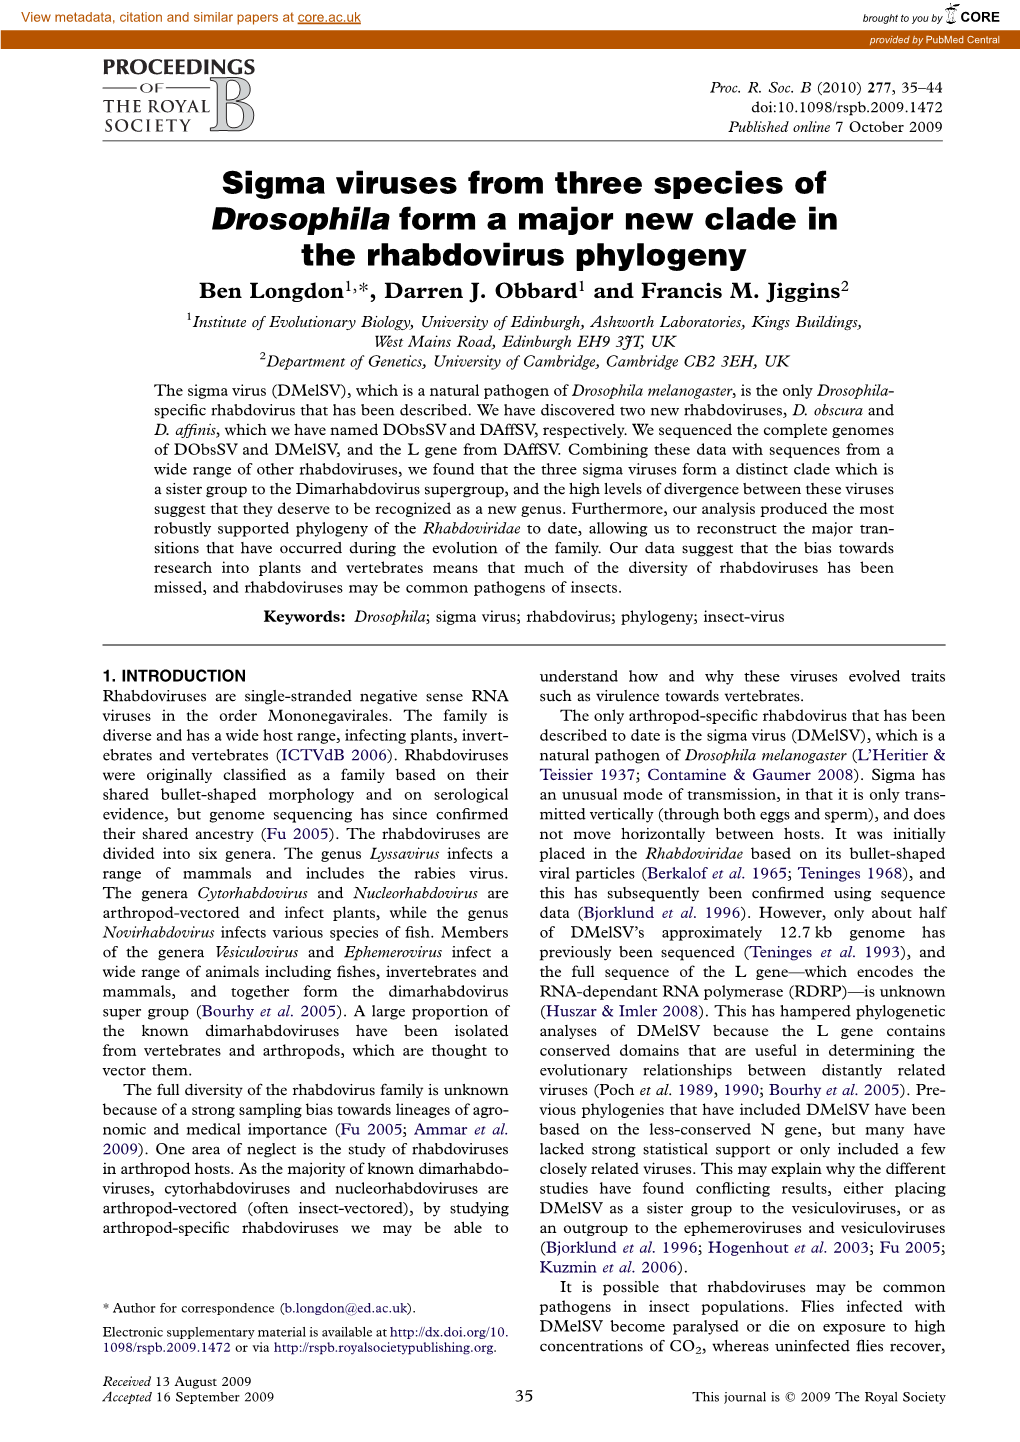 Sigma Viruses from Three Species of Drosophila Form a Major New Clade in the Rhabdovirus Phylogeny Ben Longdon1,*, Darren J